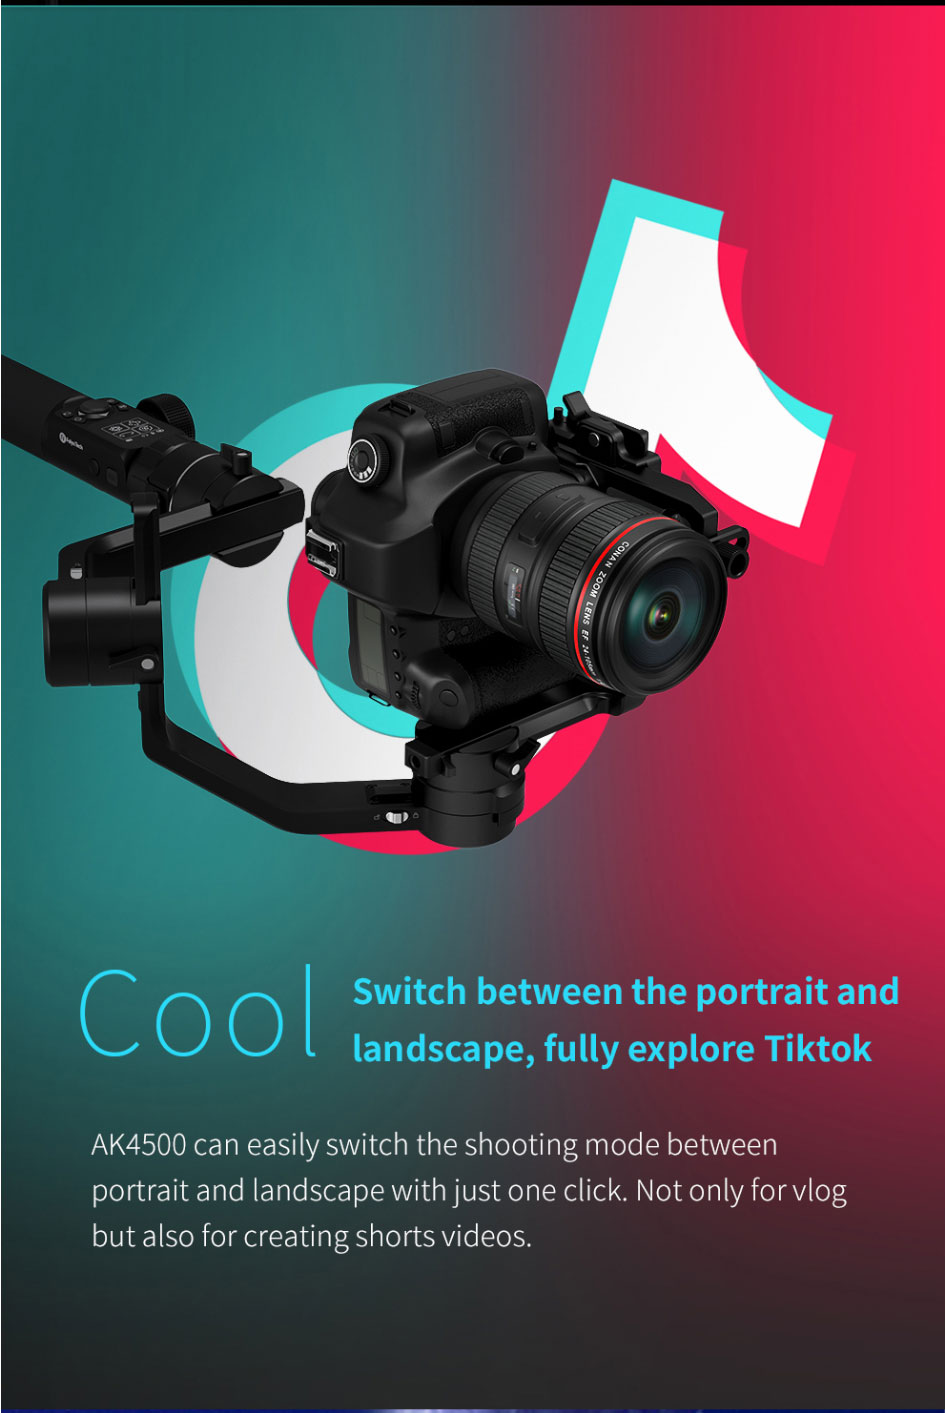 Feiyu-Tech-AK4500-3-Axis-Gimbal-Handheld-Stabilizer-Standard-Version-for-DSLR-Camera-1546442